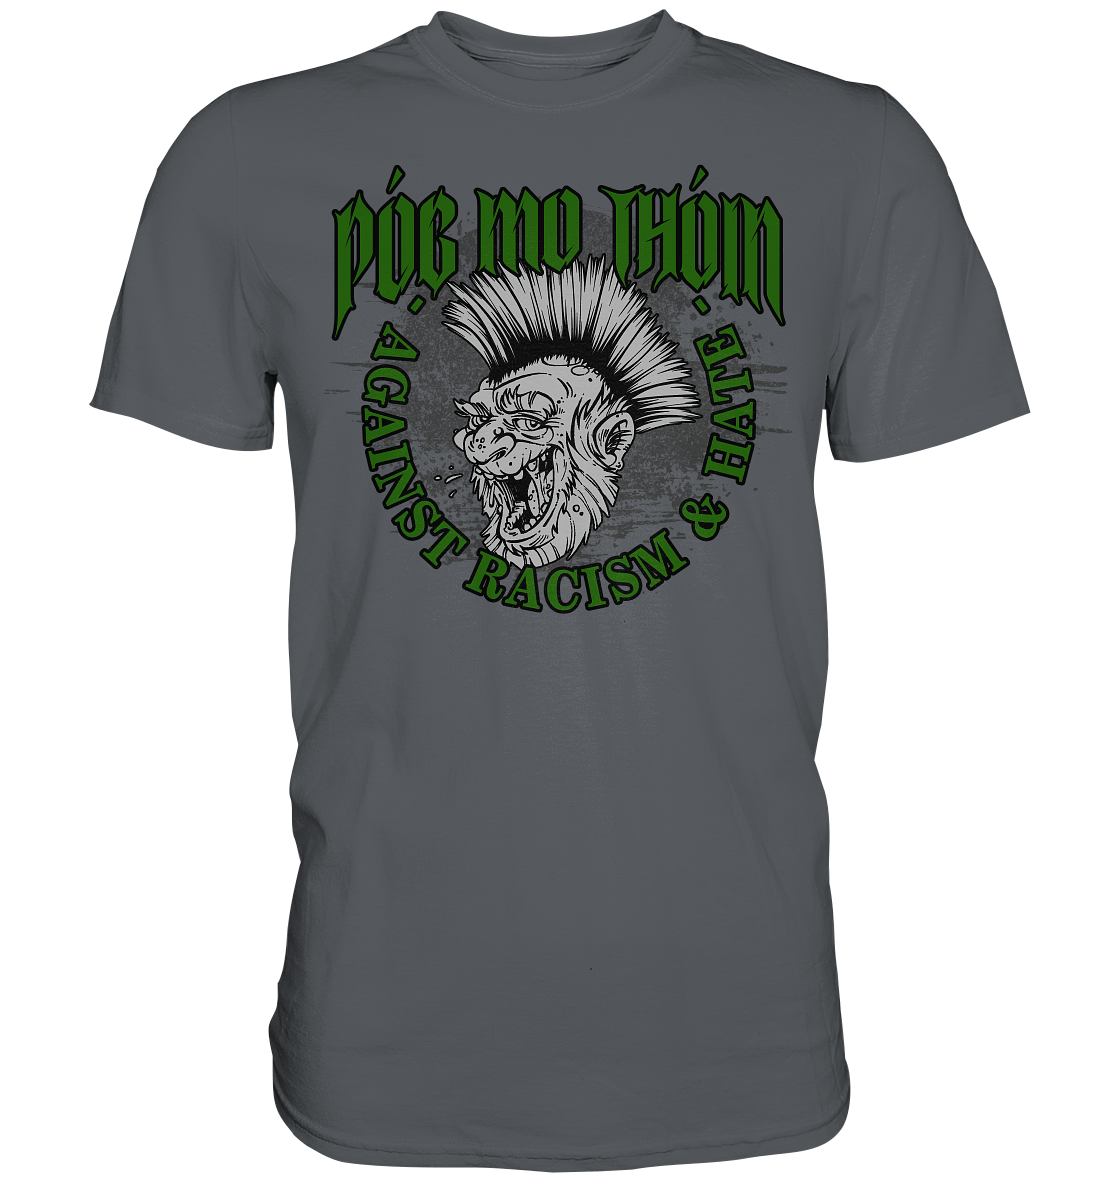 Póg Mo Thóin Streetwear "Against Racism & Hate" - Premium Shirt